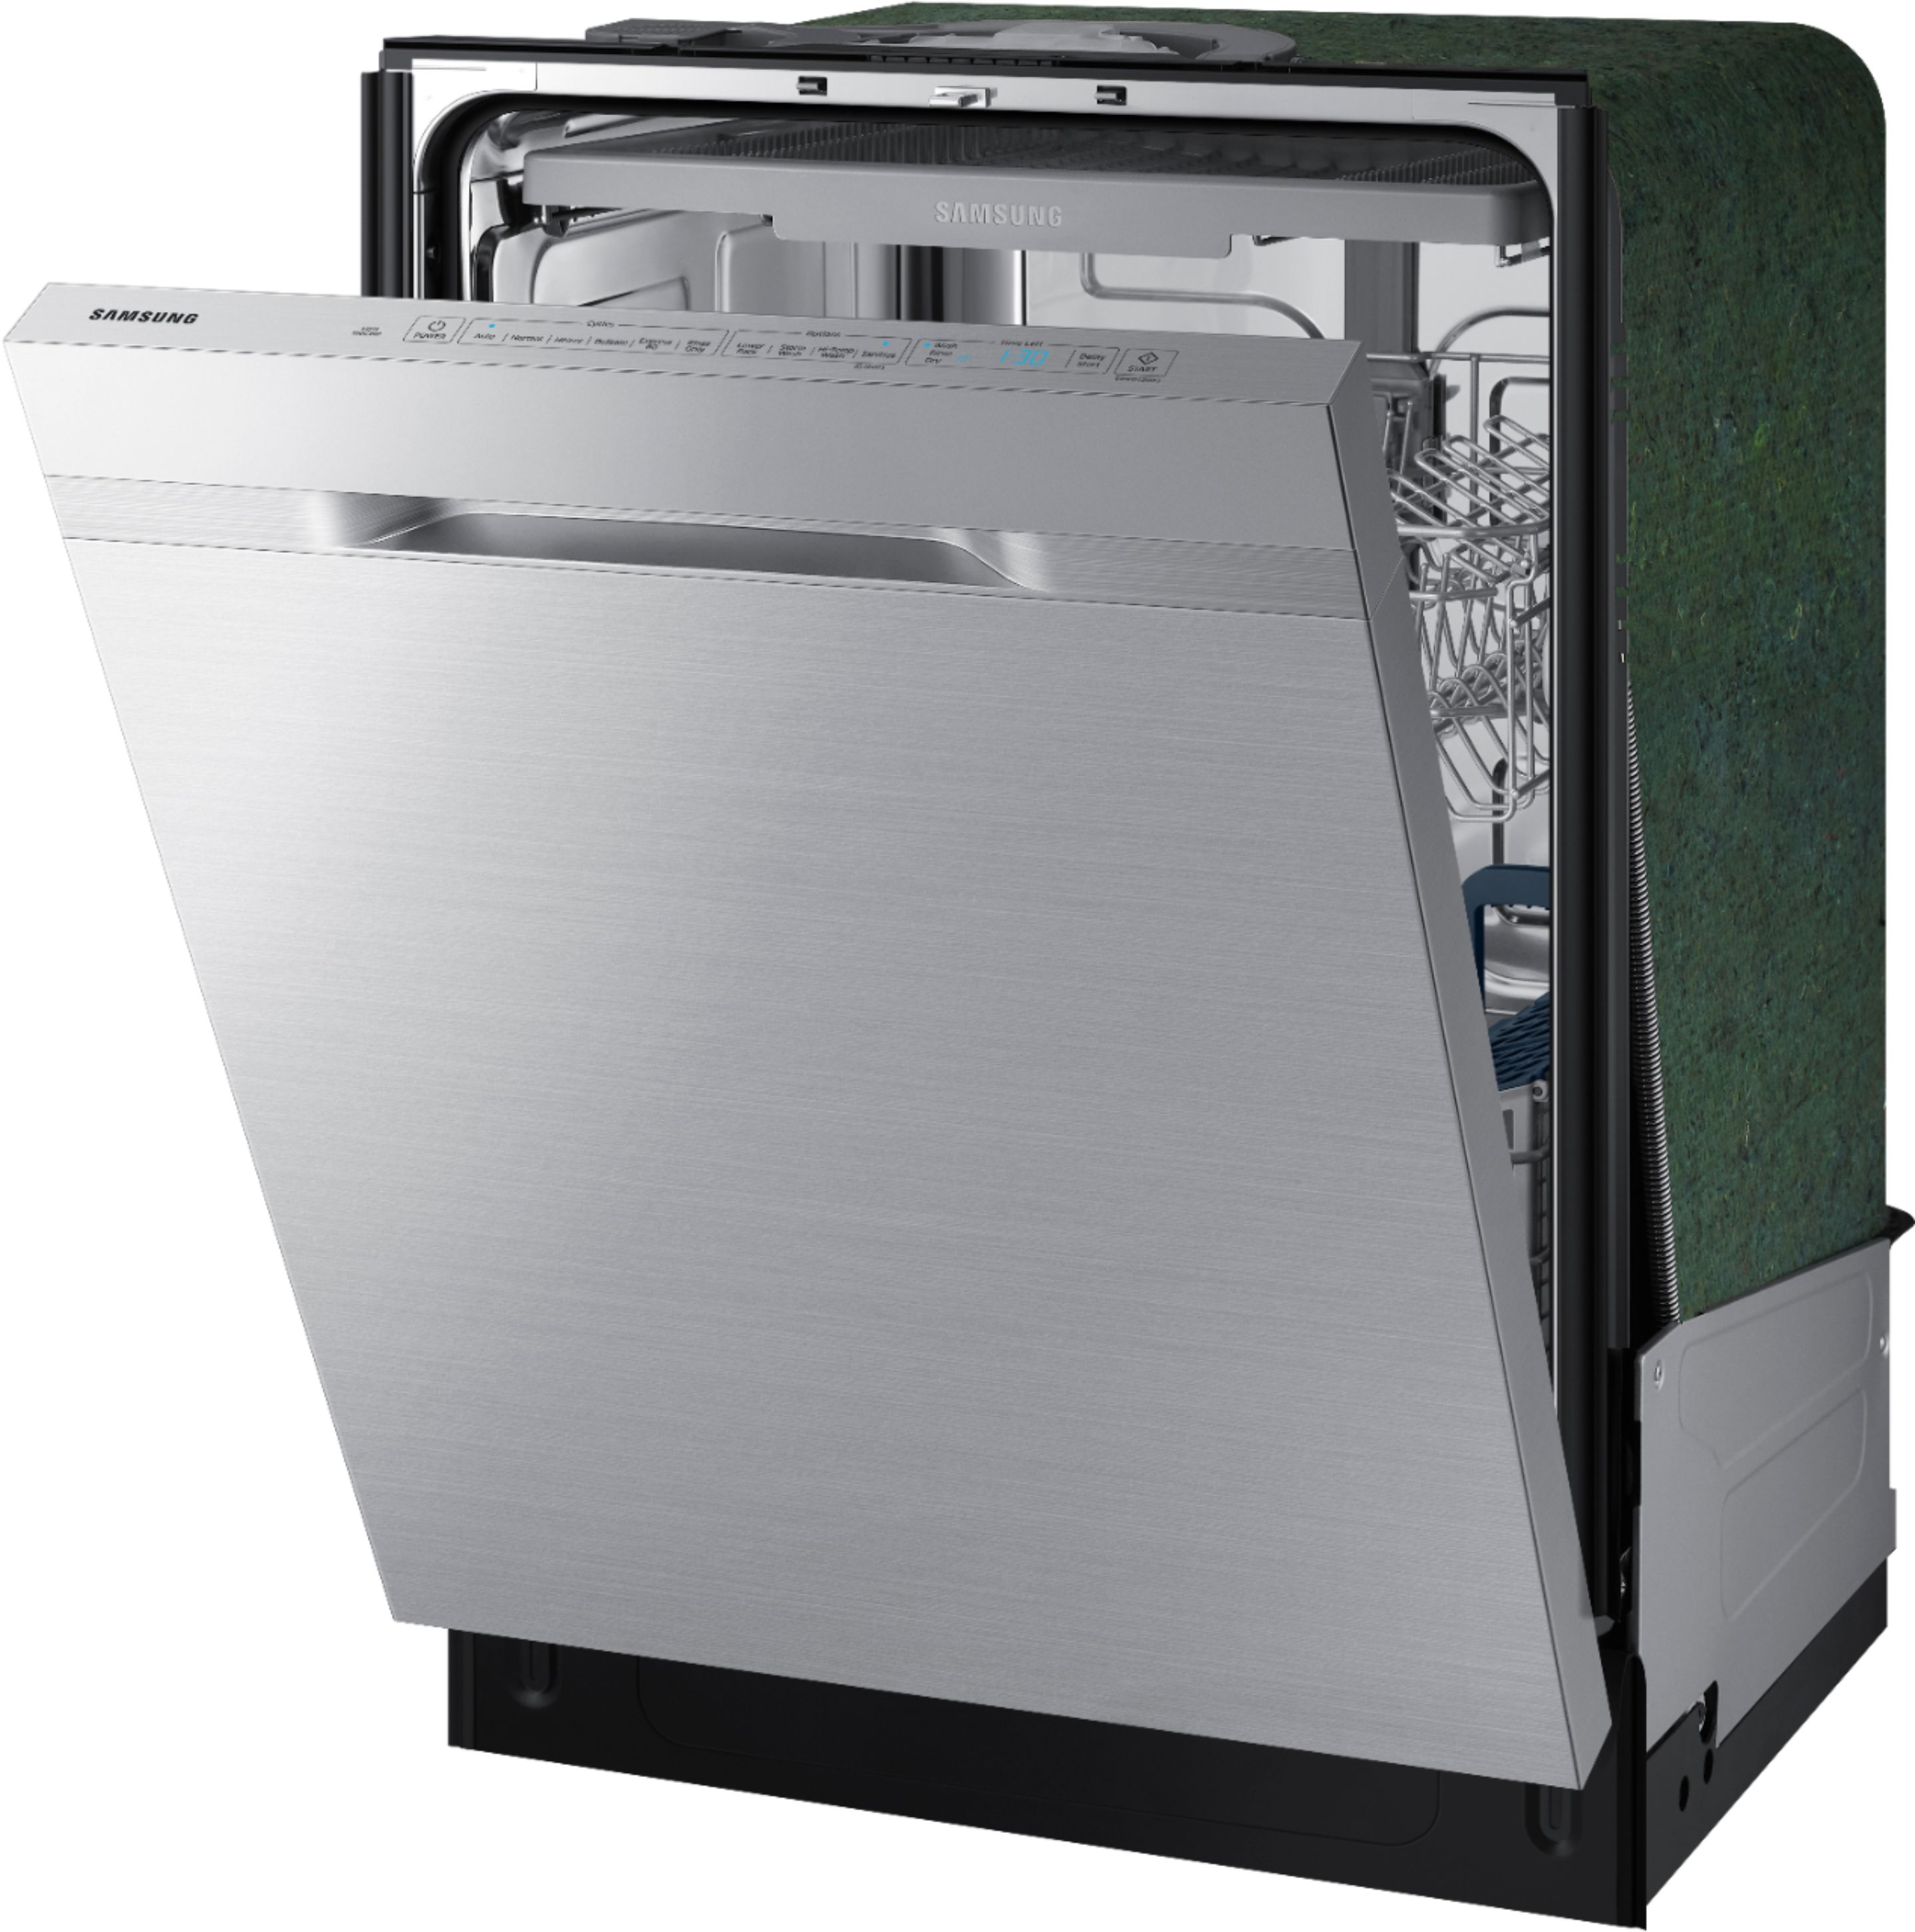 DW80R5060UG by Samsung - StormWash™ 48 dBA Dishwasher in Black Stainless  Steel